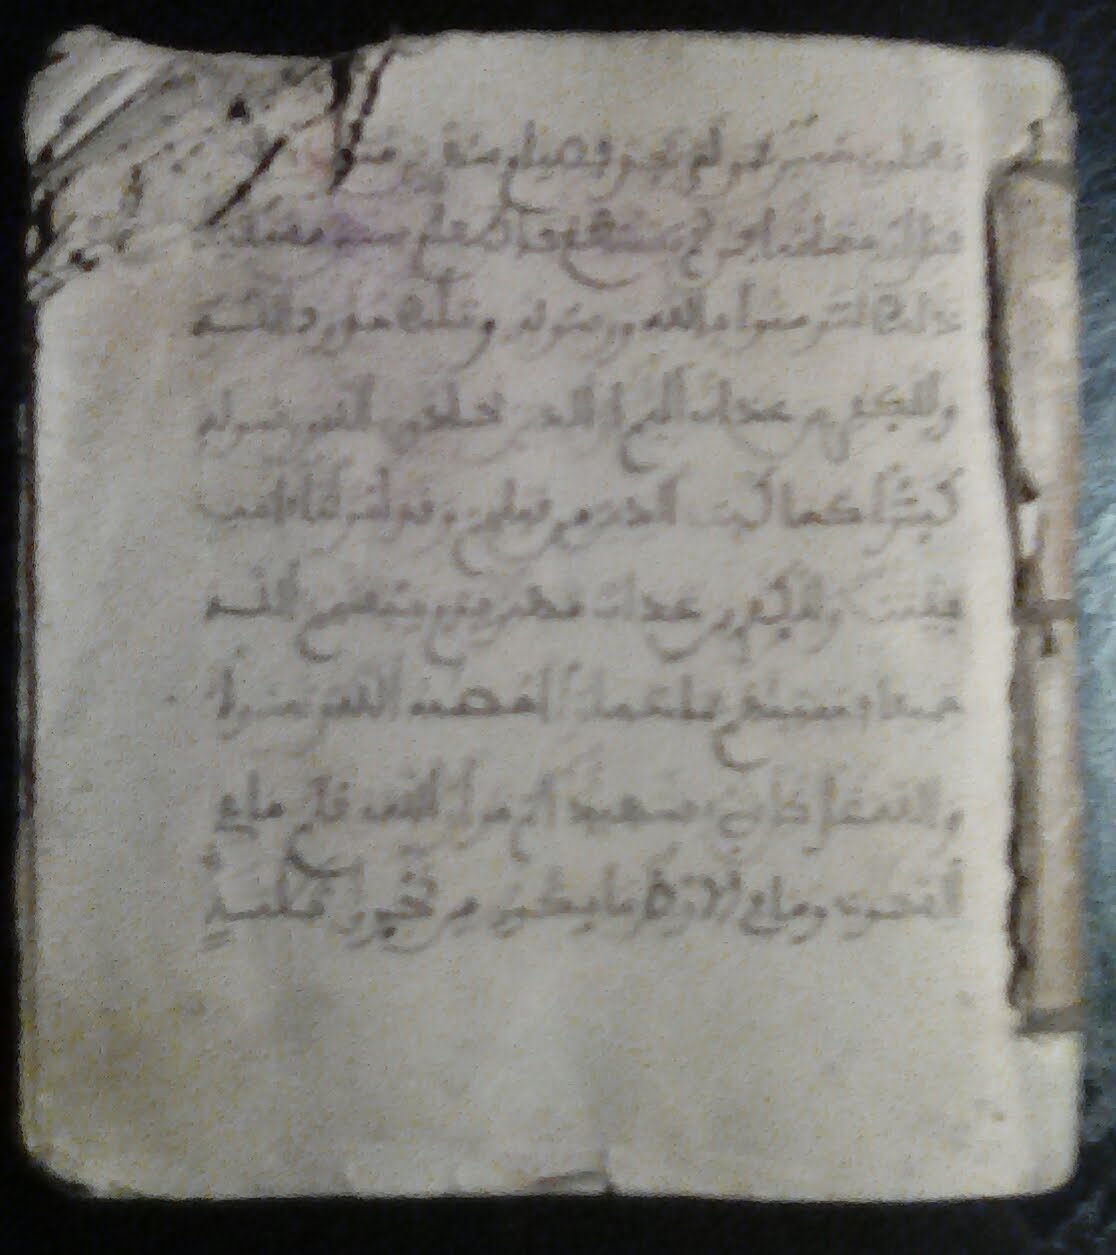 جزء من مصحف مخطوط باليد عمره يتجاوز 150سنةللبيع /Part of a Koran, over 150 years old for sale